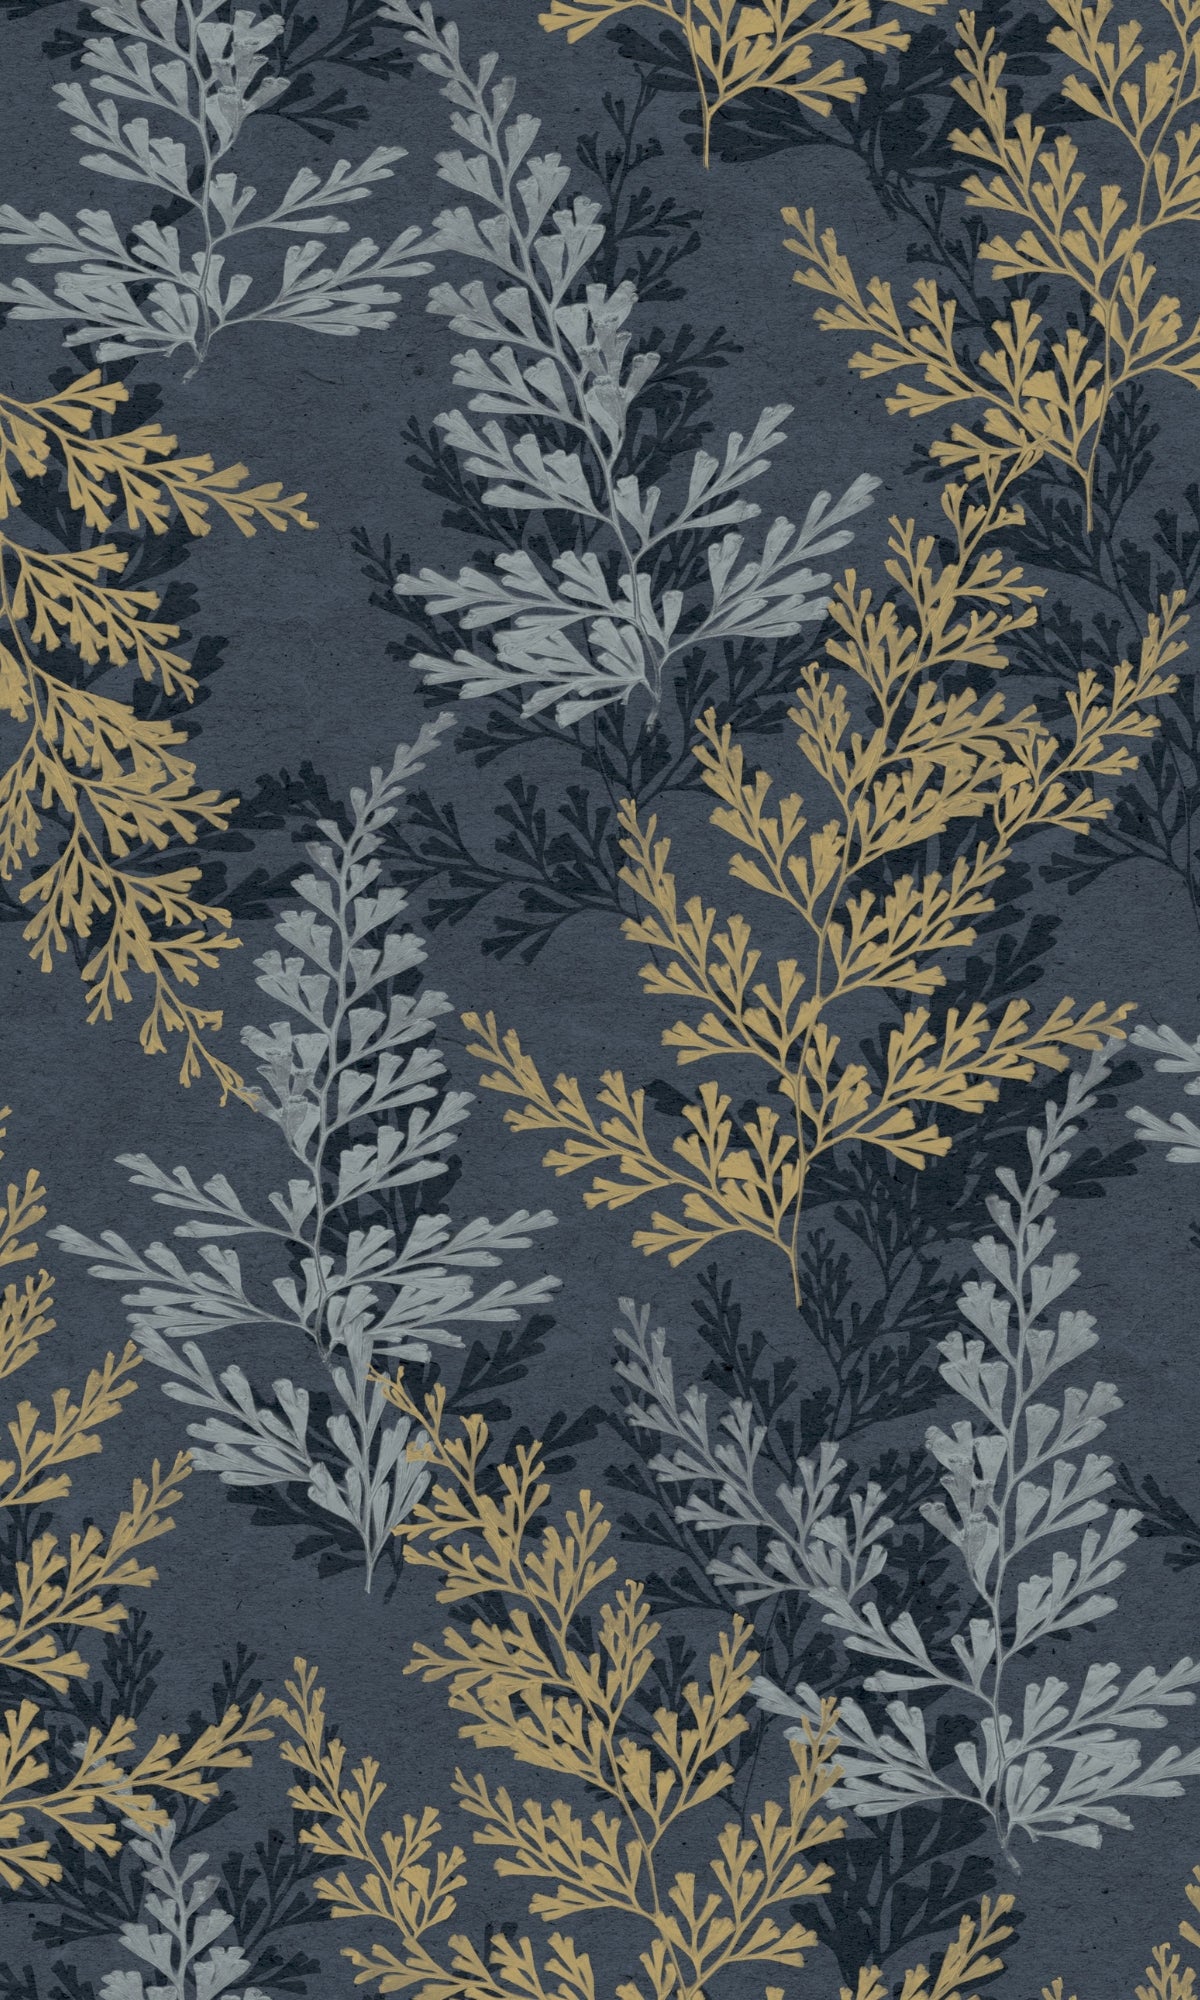 Midnight Blue Wild Herbs Leave Tropical Wallpaper R9149